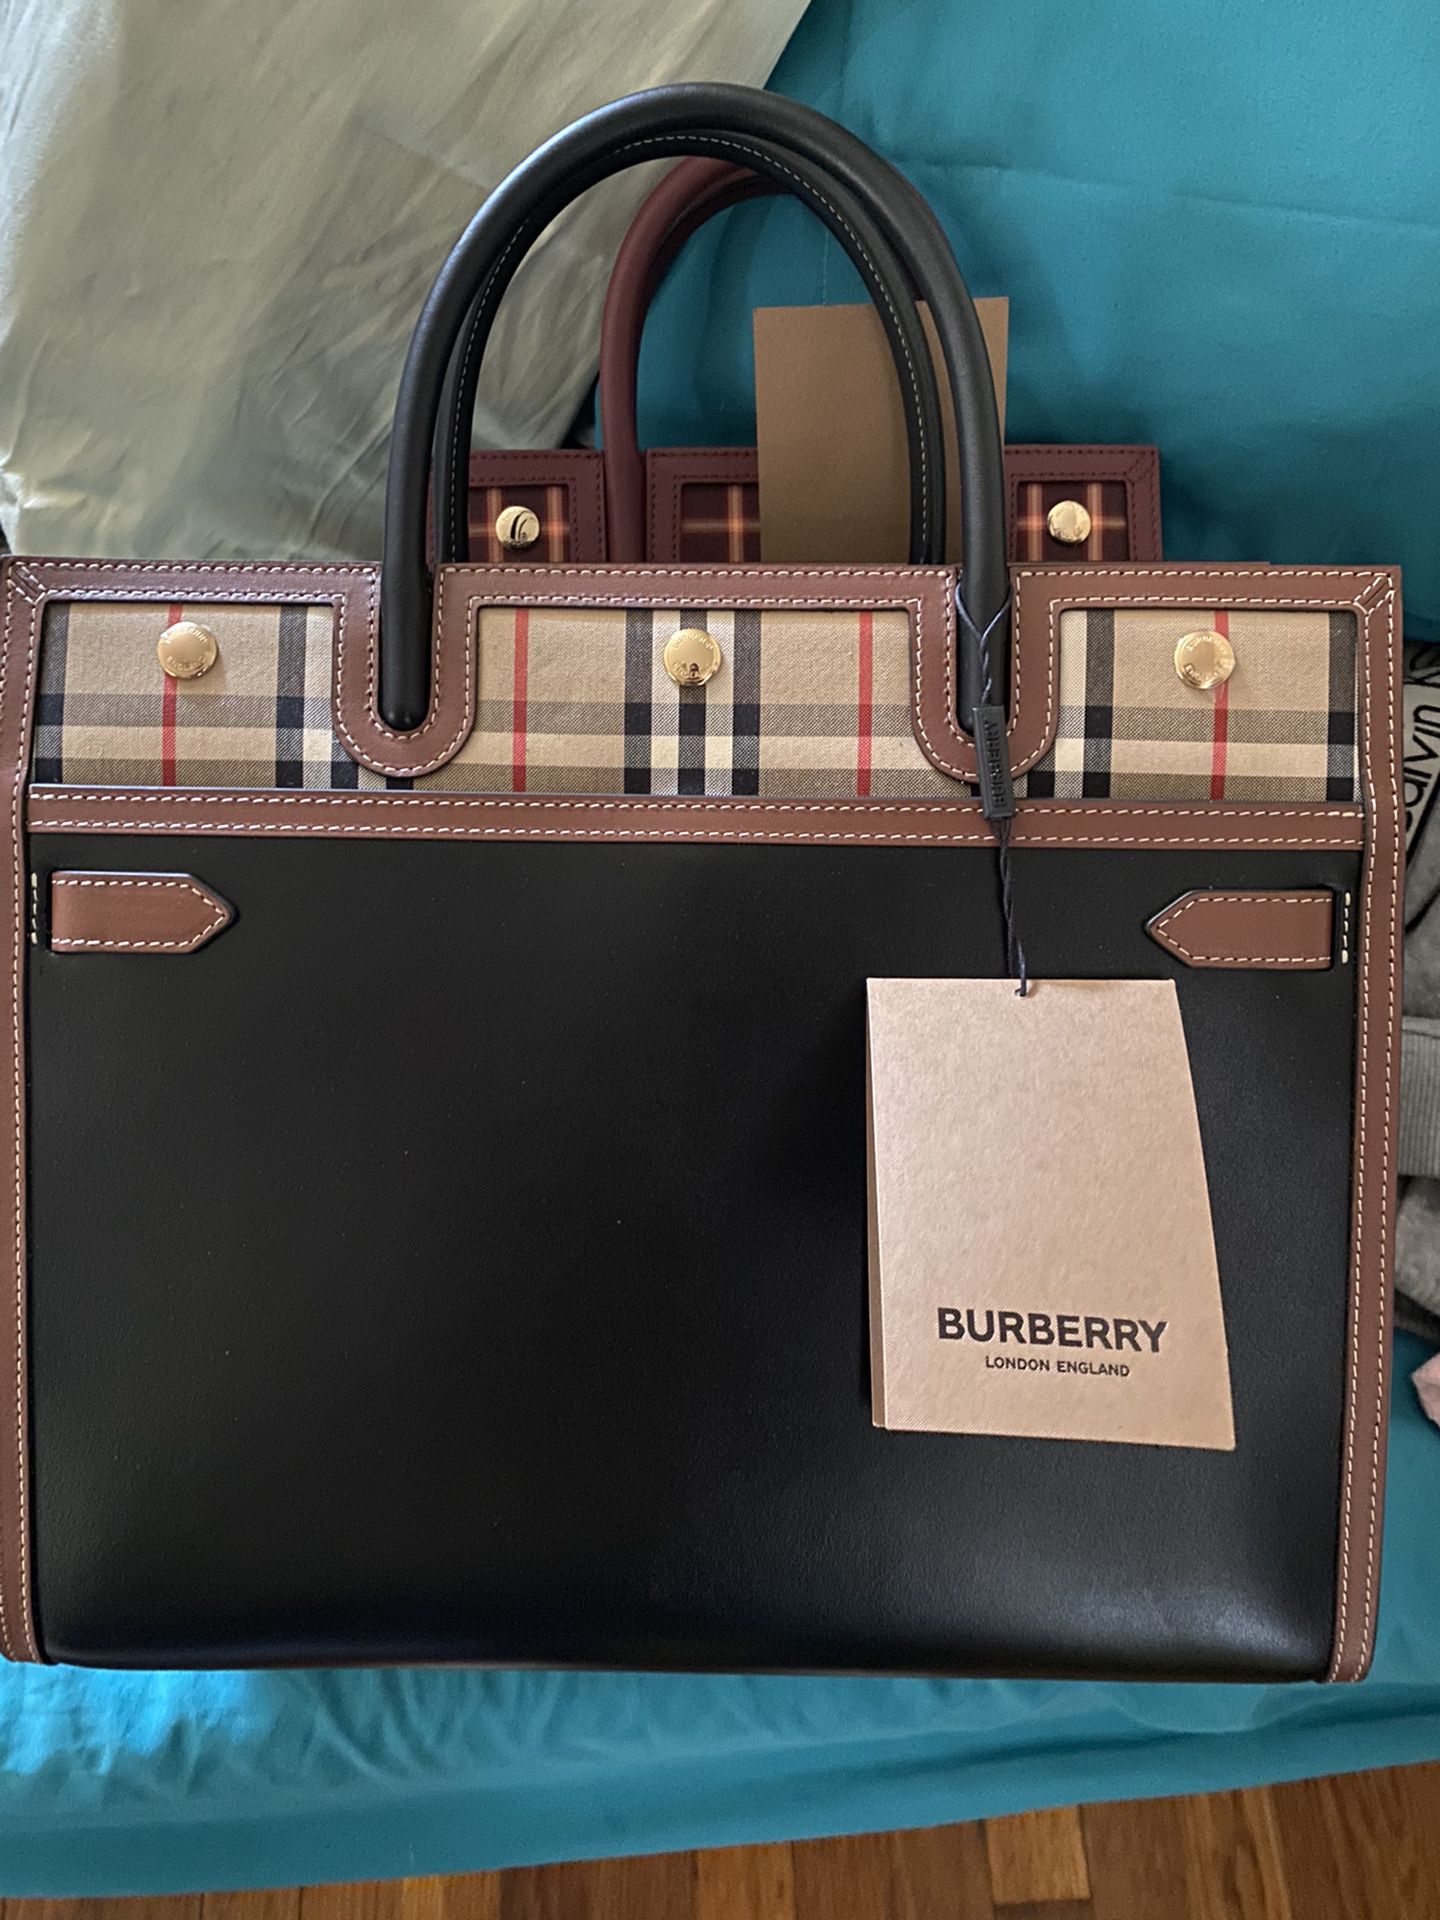 Authentic Burberry London Handbag  Burberry london, Burberry bag